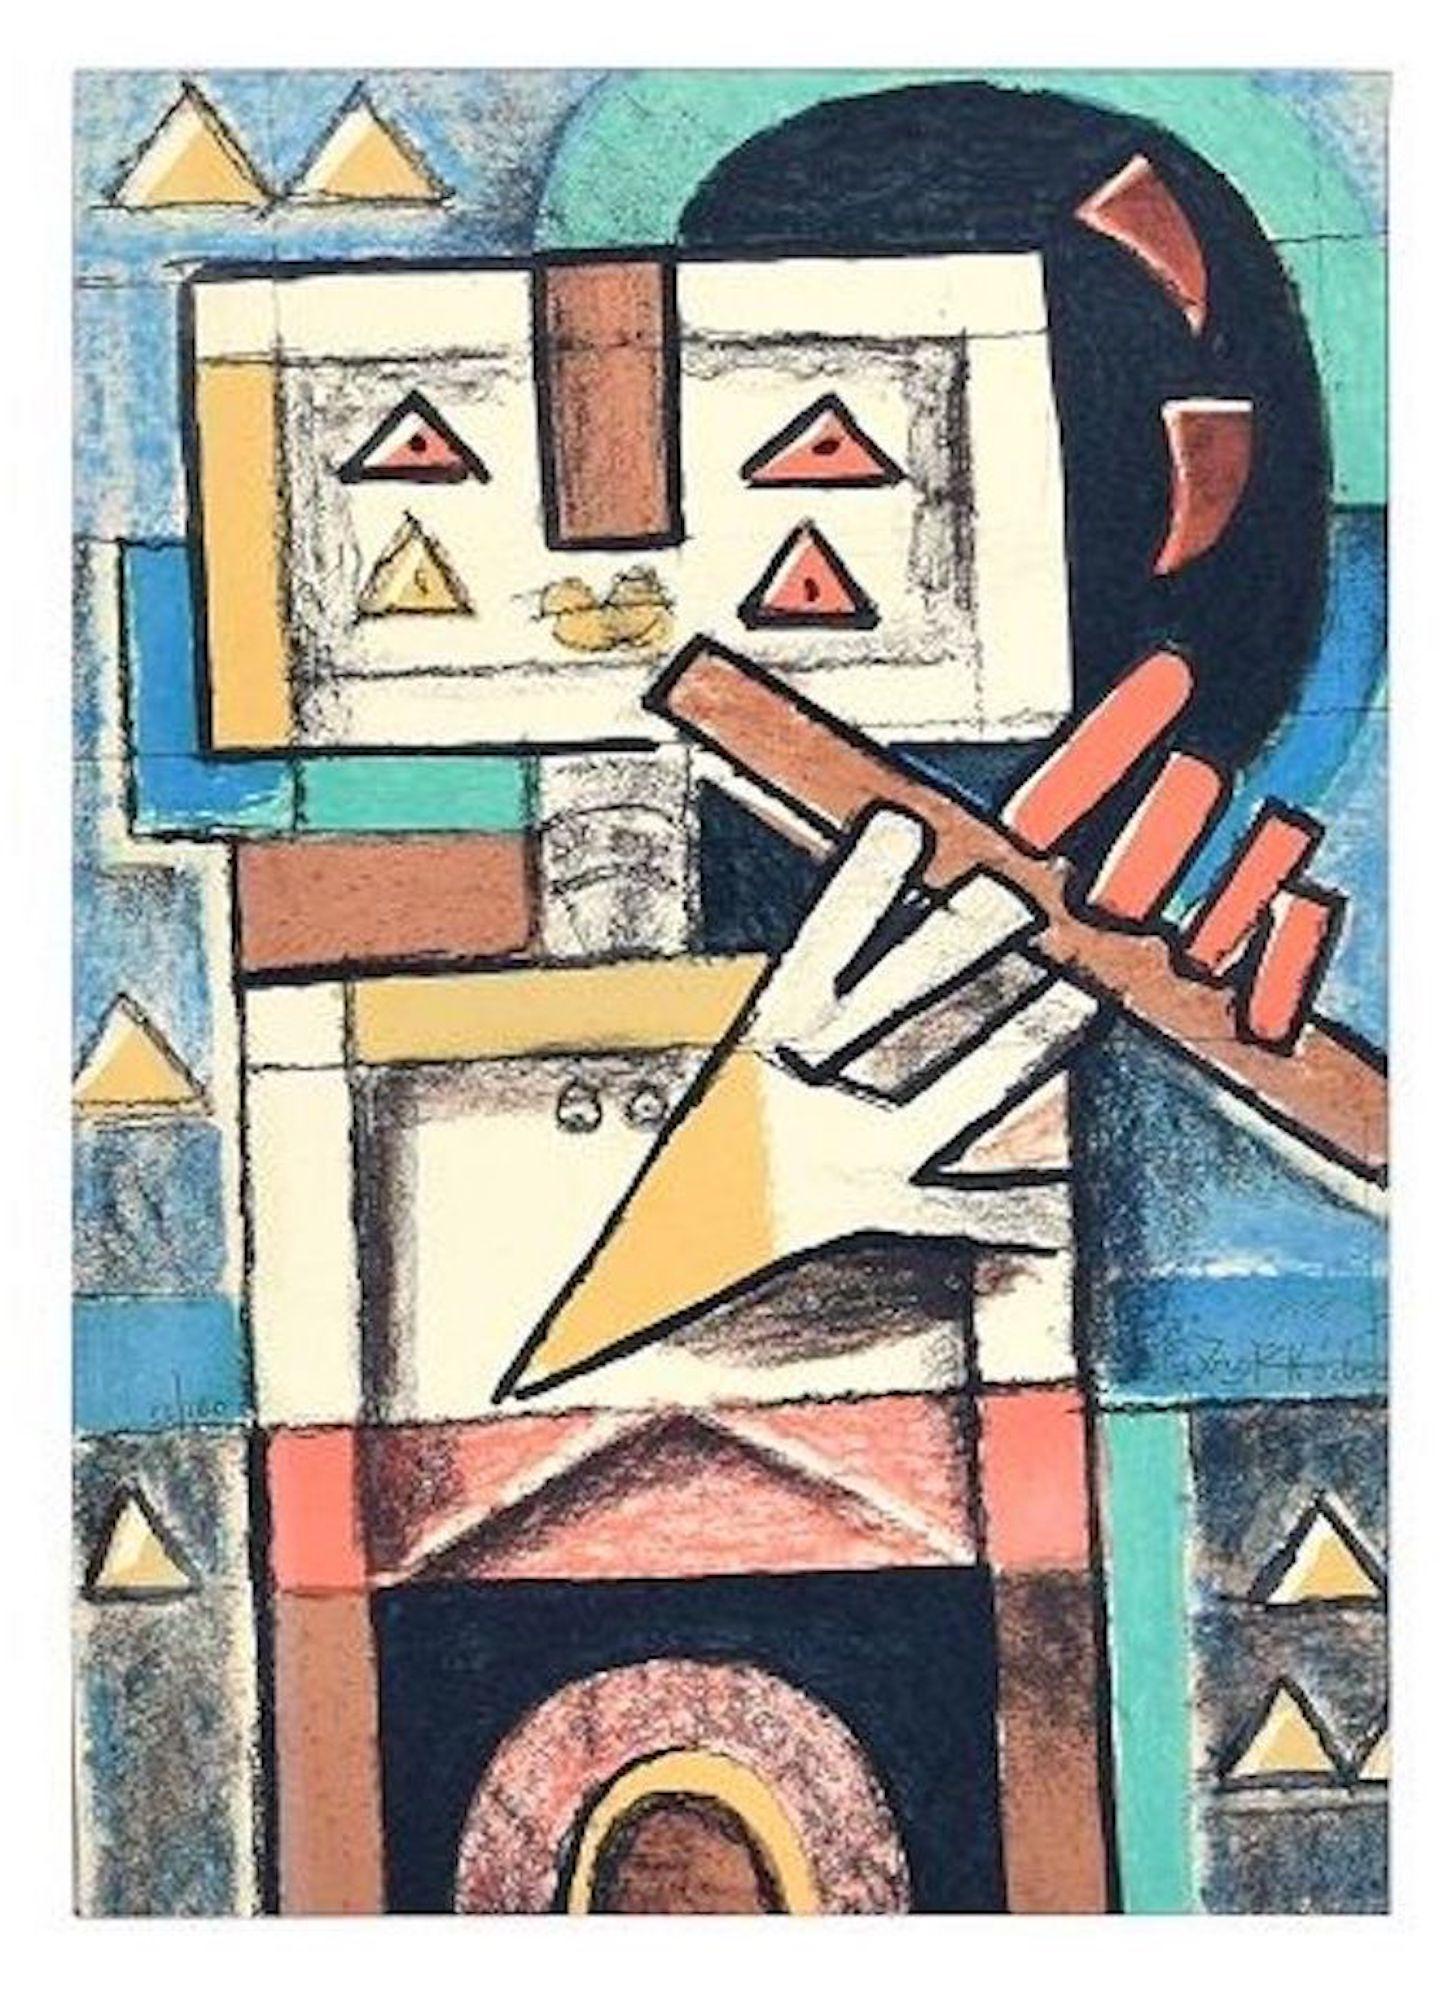 Ibrahim Kodra Abstract Print - Flute Player - Original Lithograph by I. Kodra - 1975